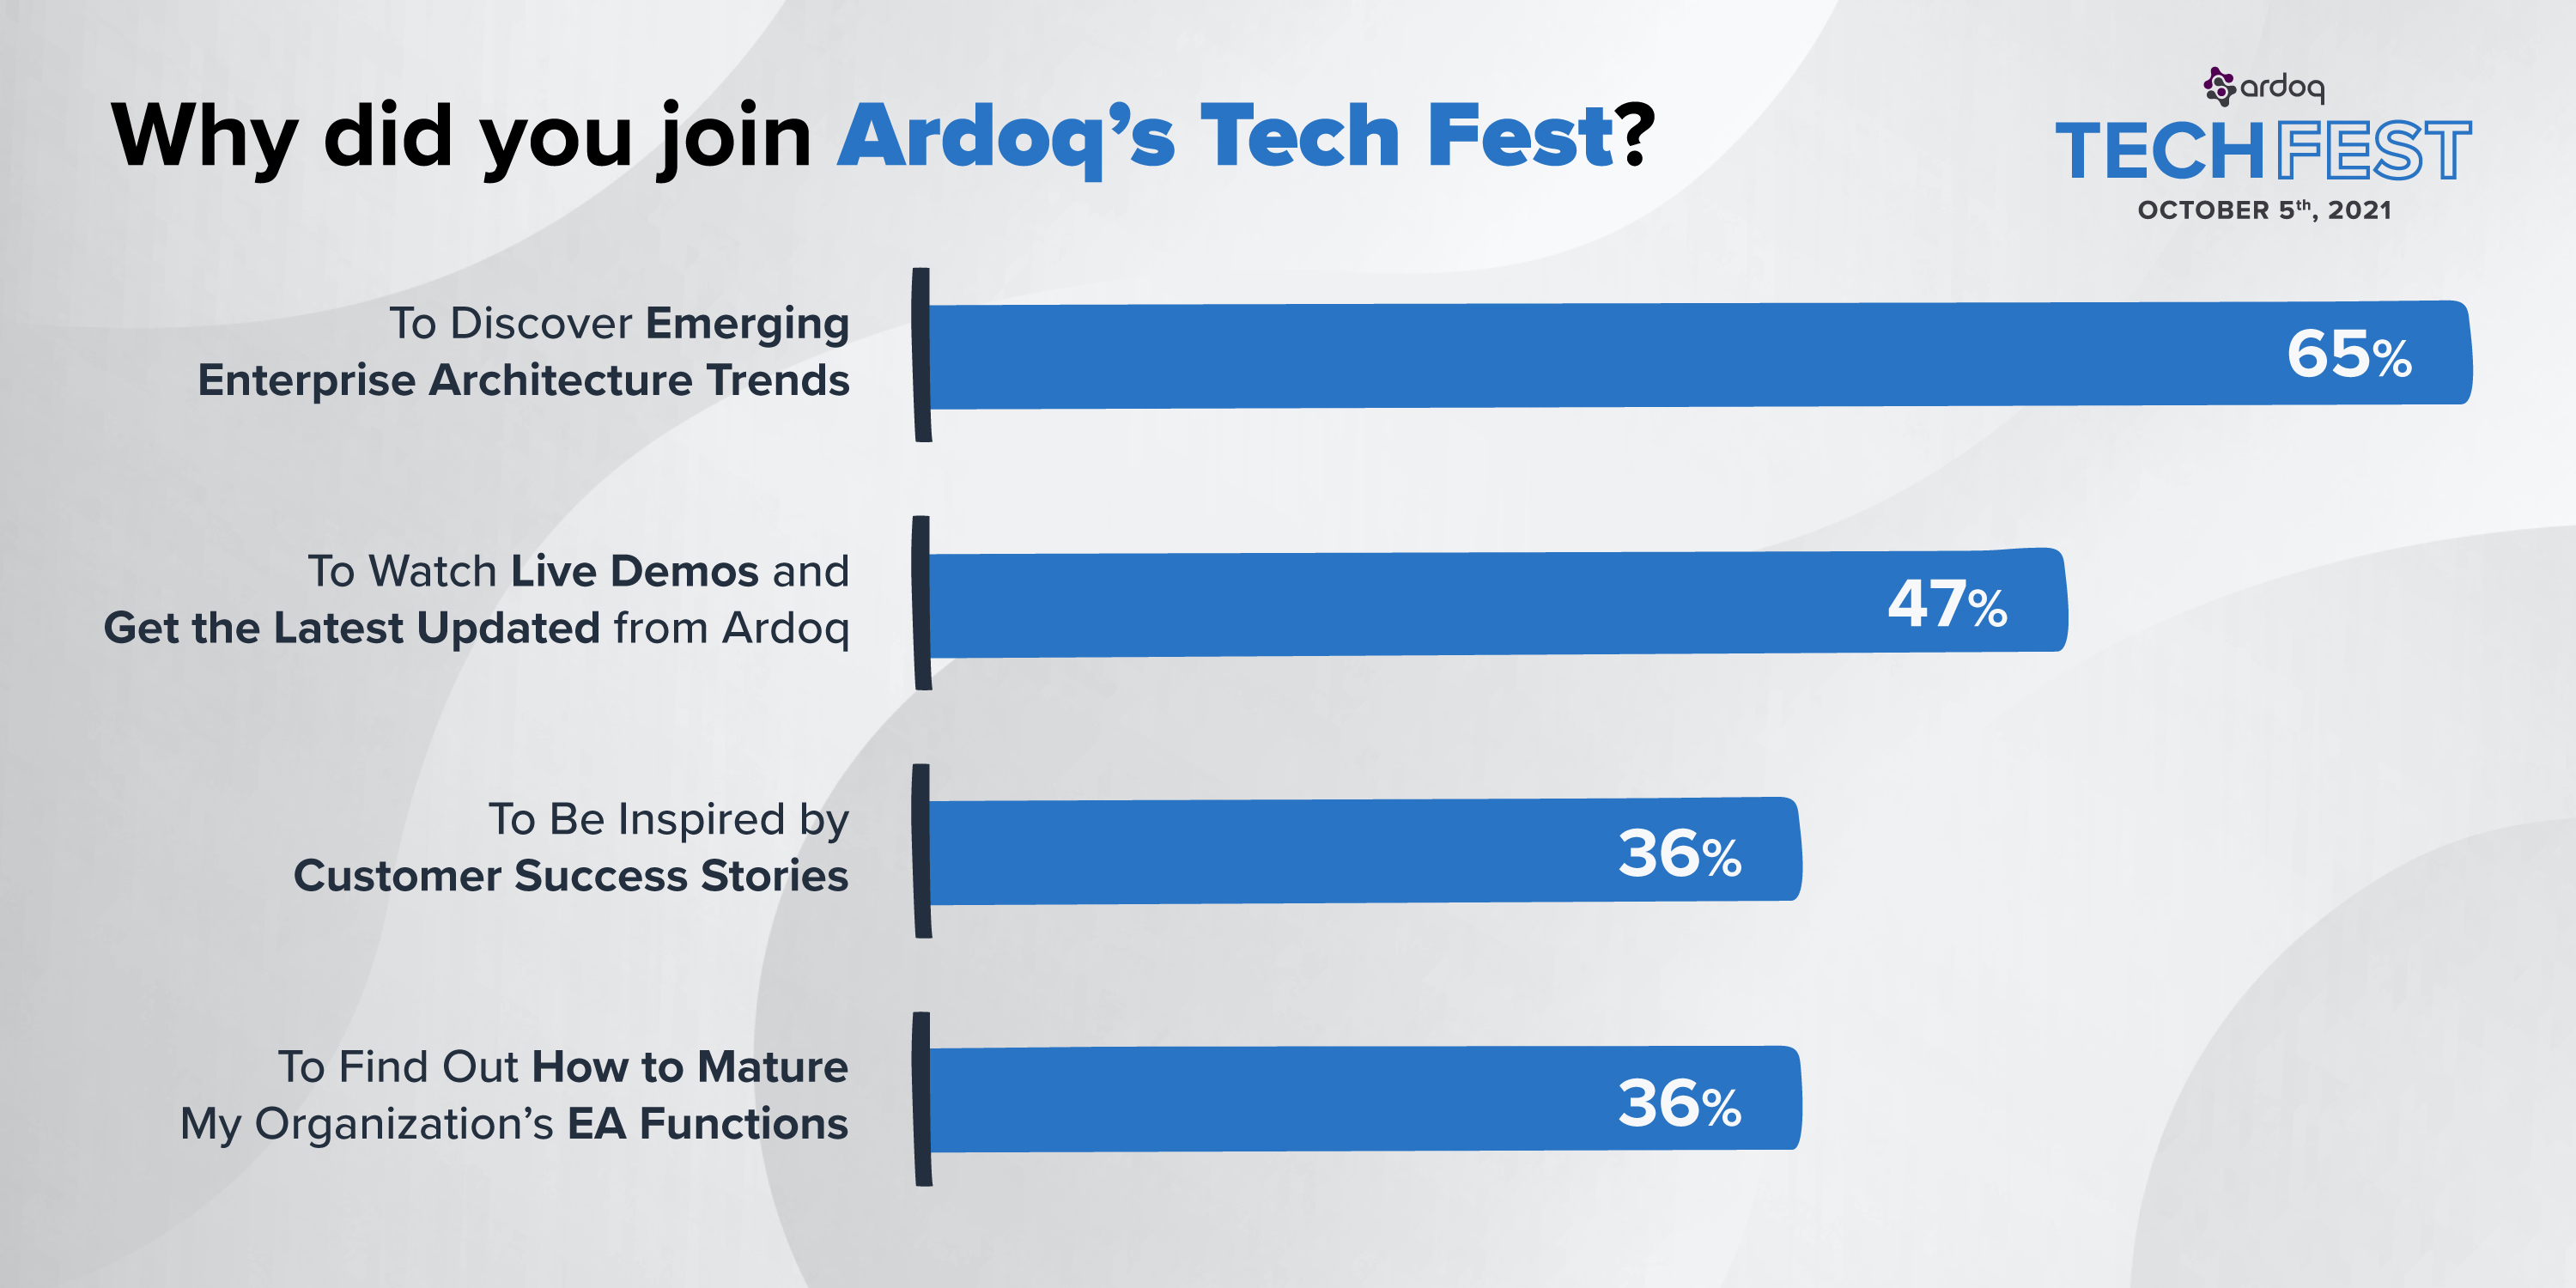 Ardoq Tech Fest 2021 poll